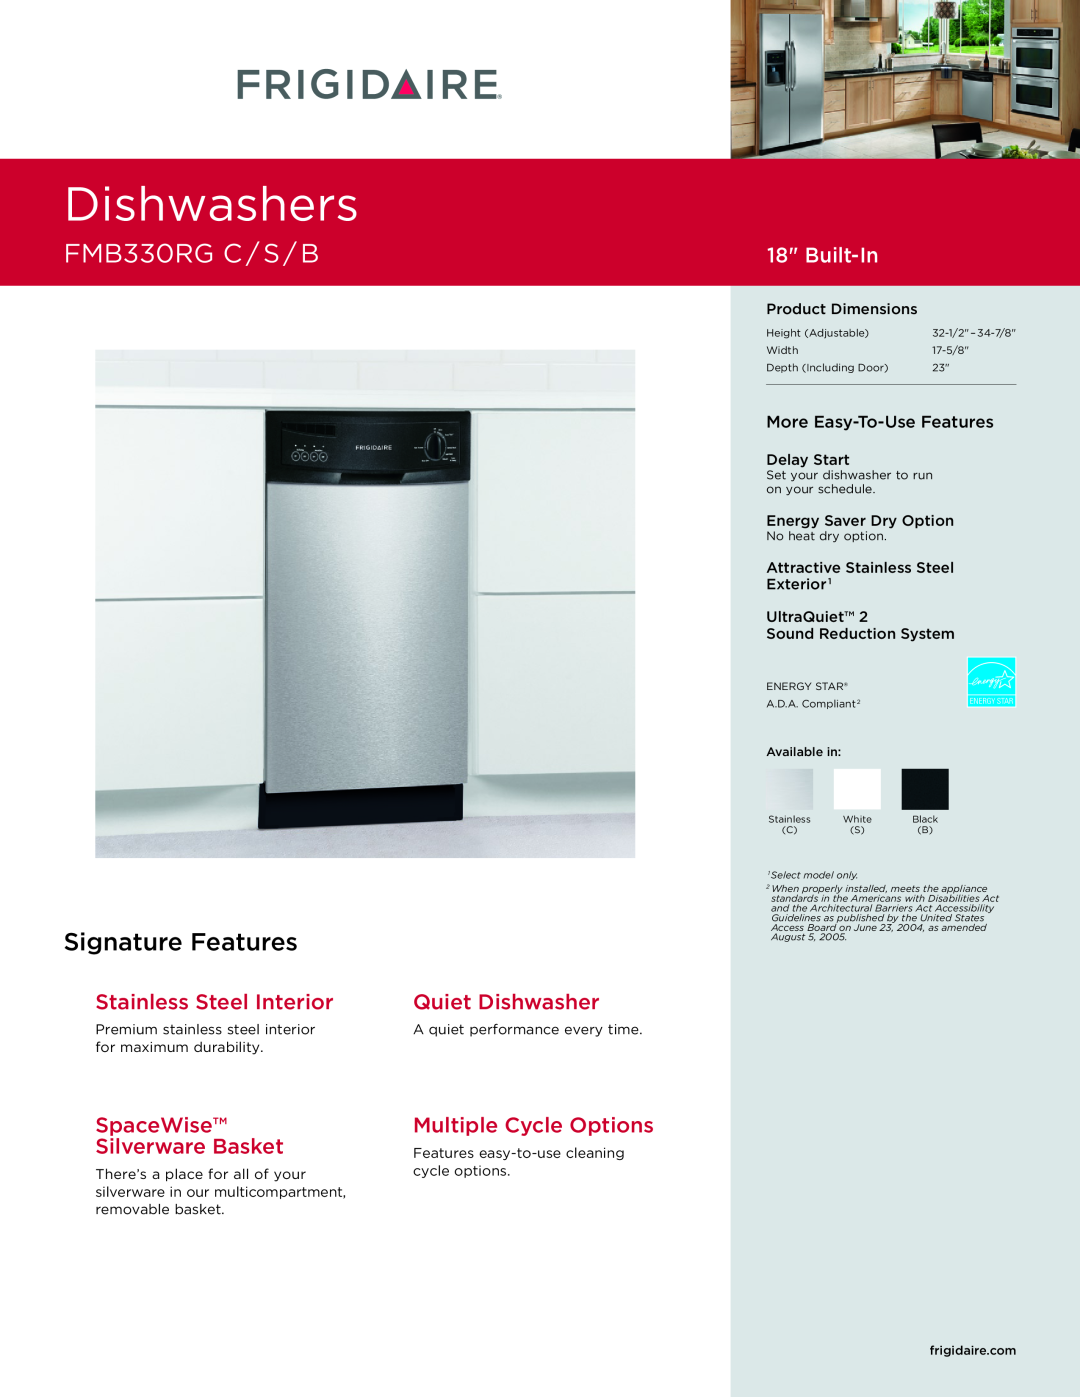 Frigidaire FMB330RG dimensions Dishwashersrop-In Cooktop, FMB3PEC3085KRGCS / S / B, Signature Features, BuiltElectric-In 